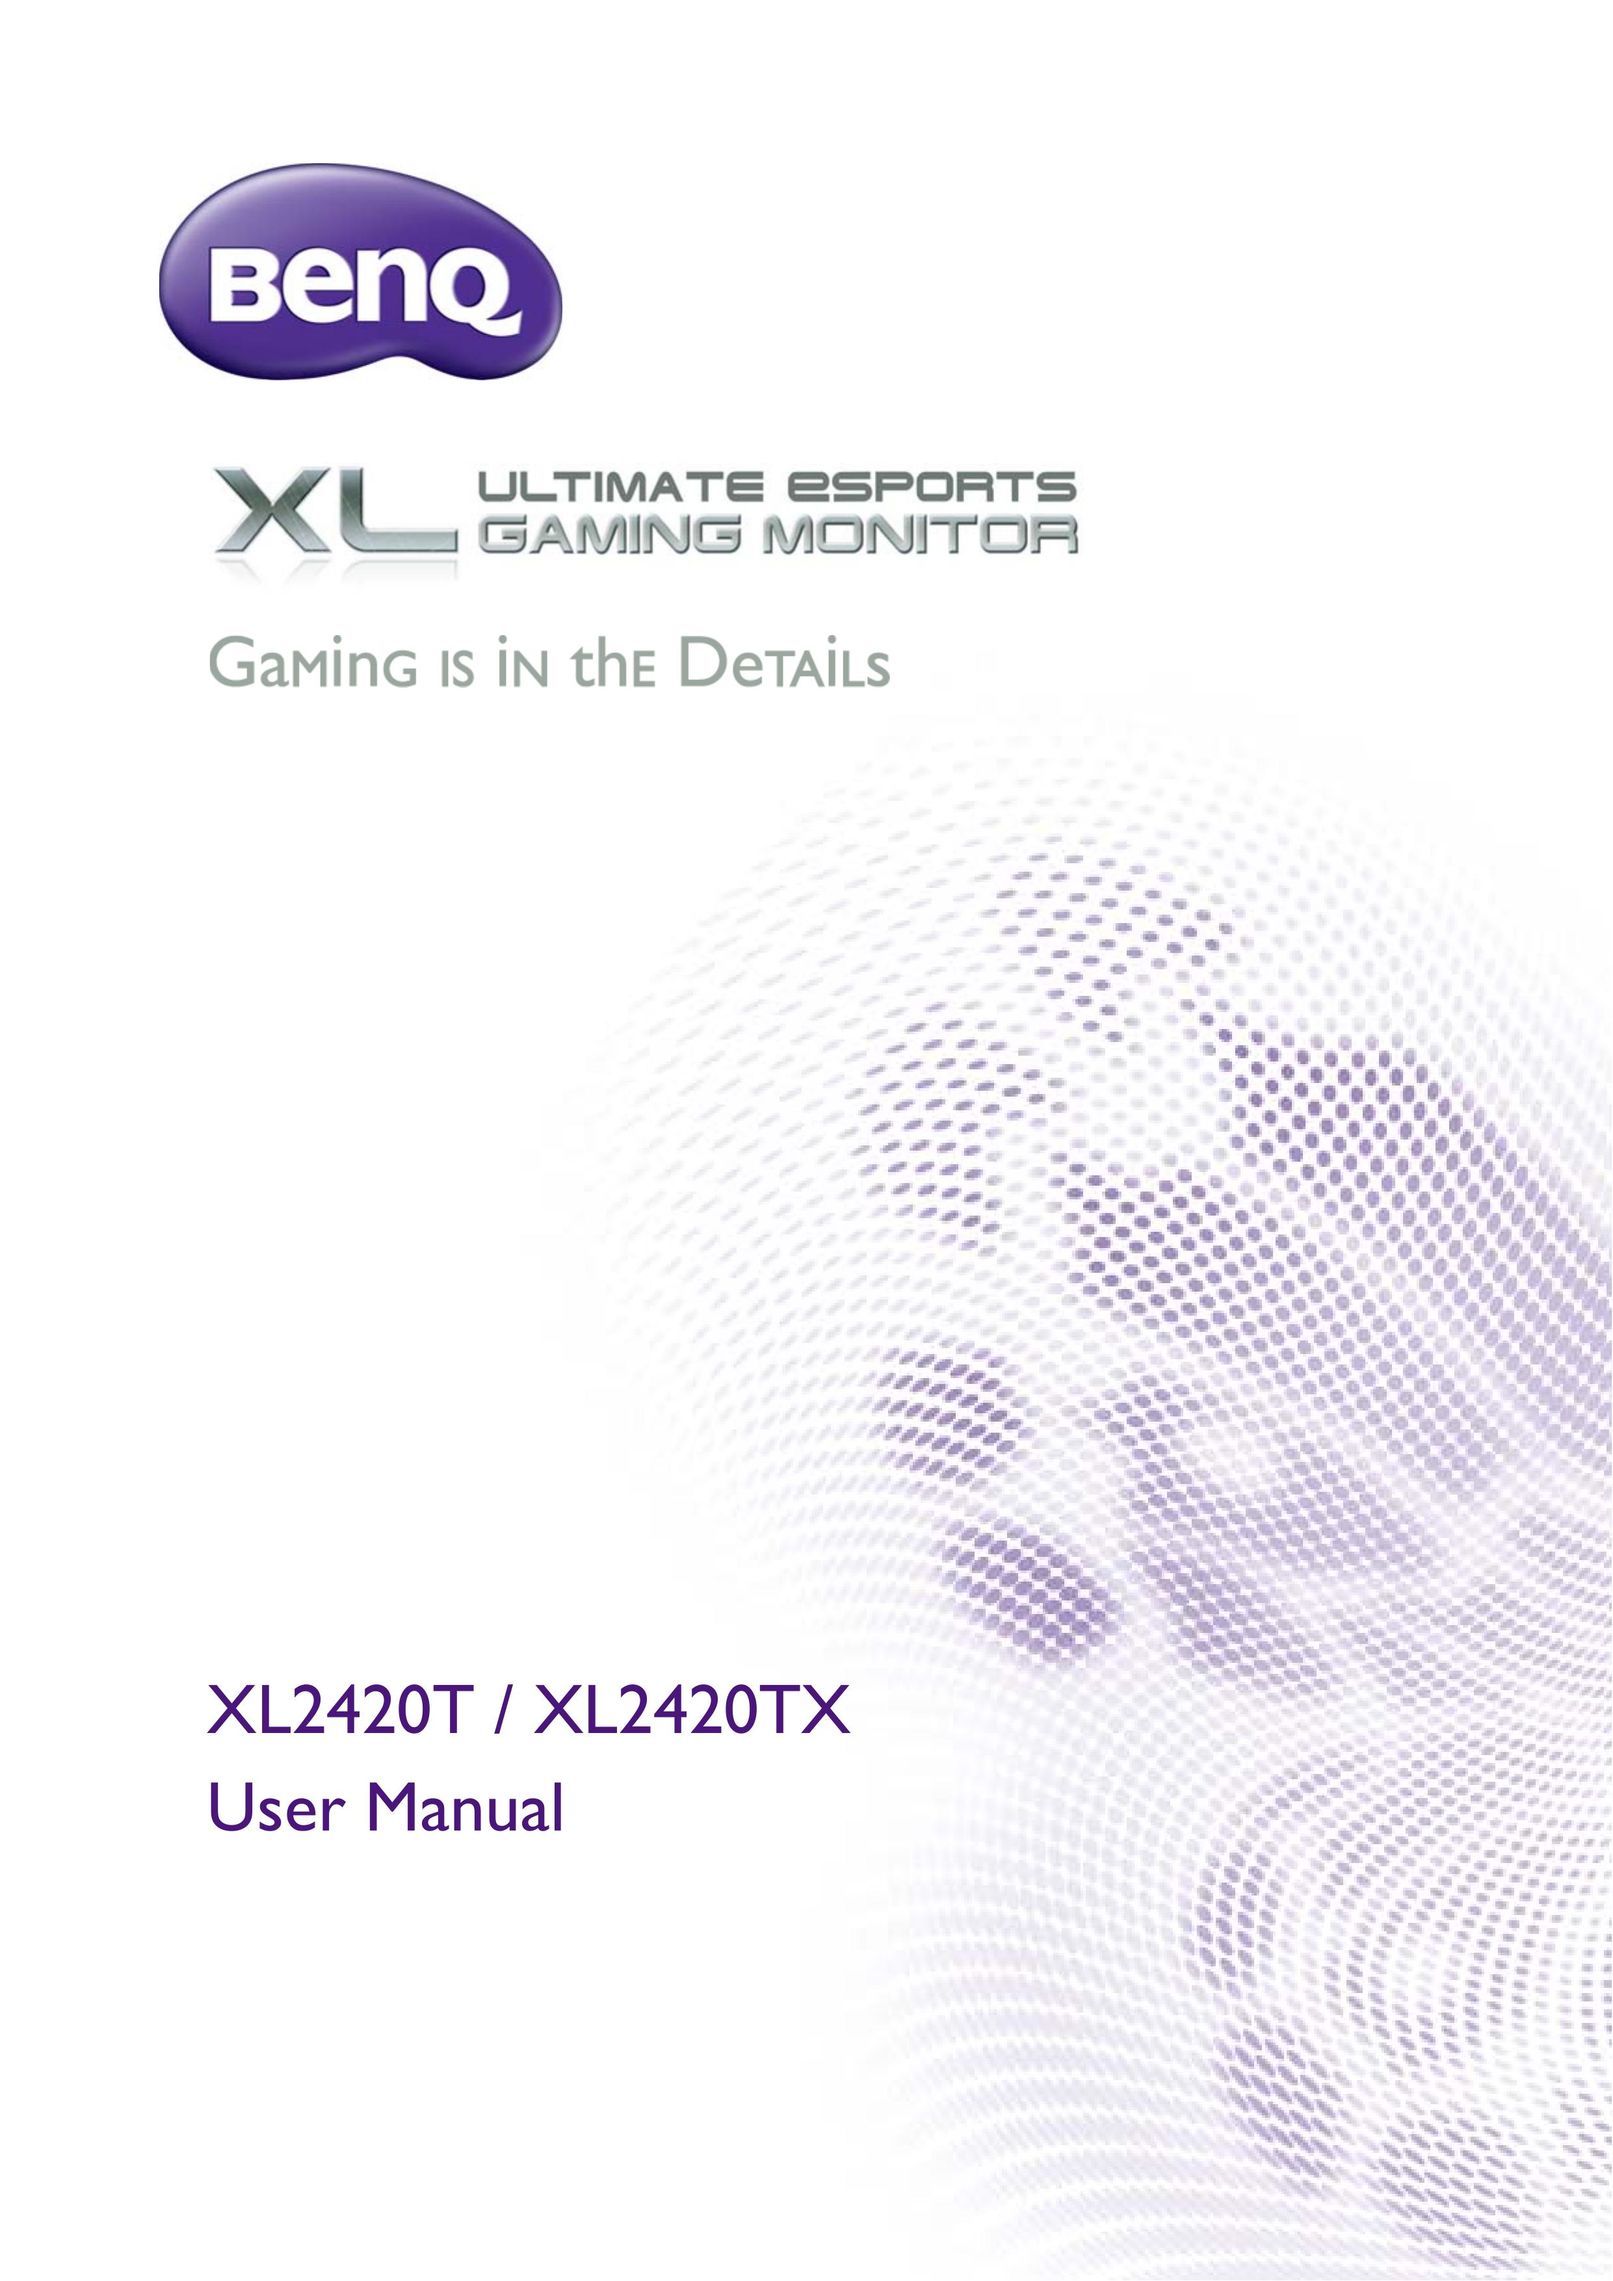 BenQ XL2420T / XL2420TX Video Gaming Accessories User Manual